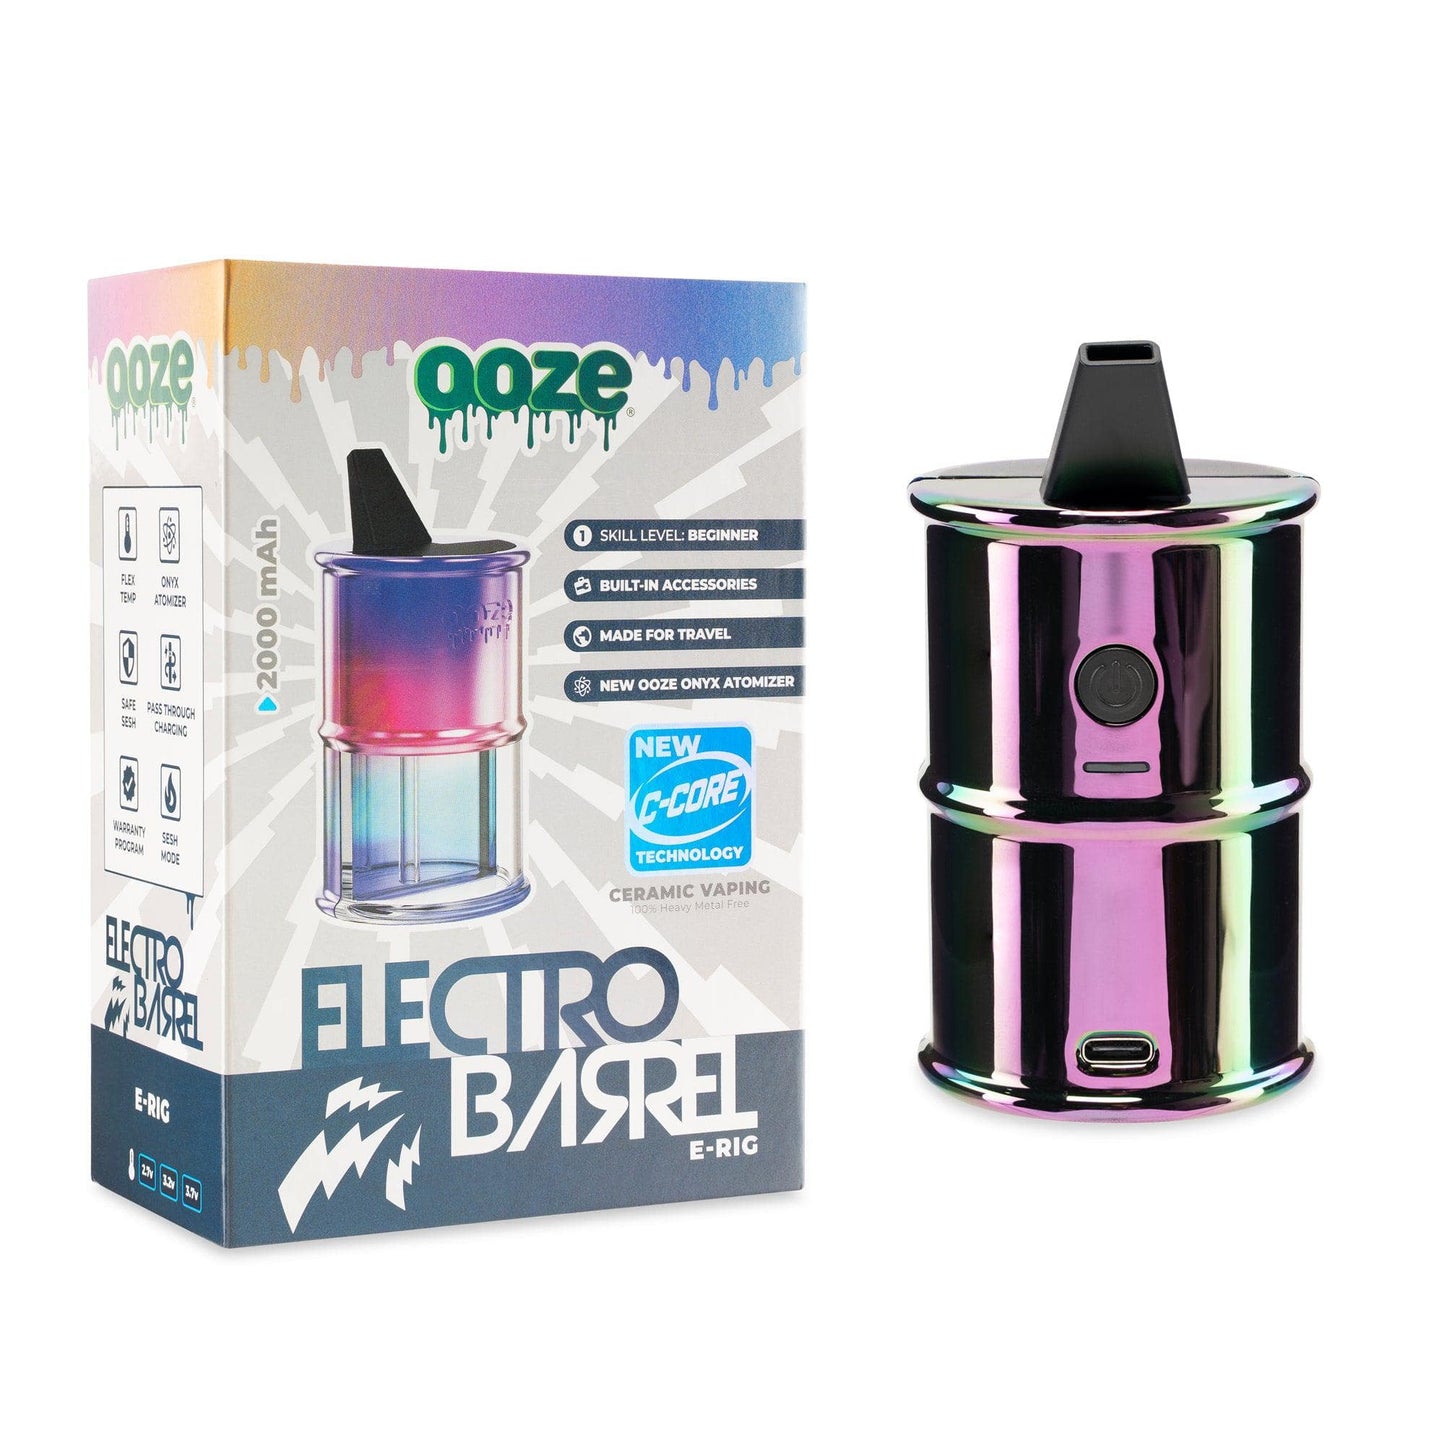 Ooze e-rig Rainbow Ooze Electro Barrel E-Rig – C-Core 2000 mAh